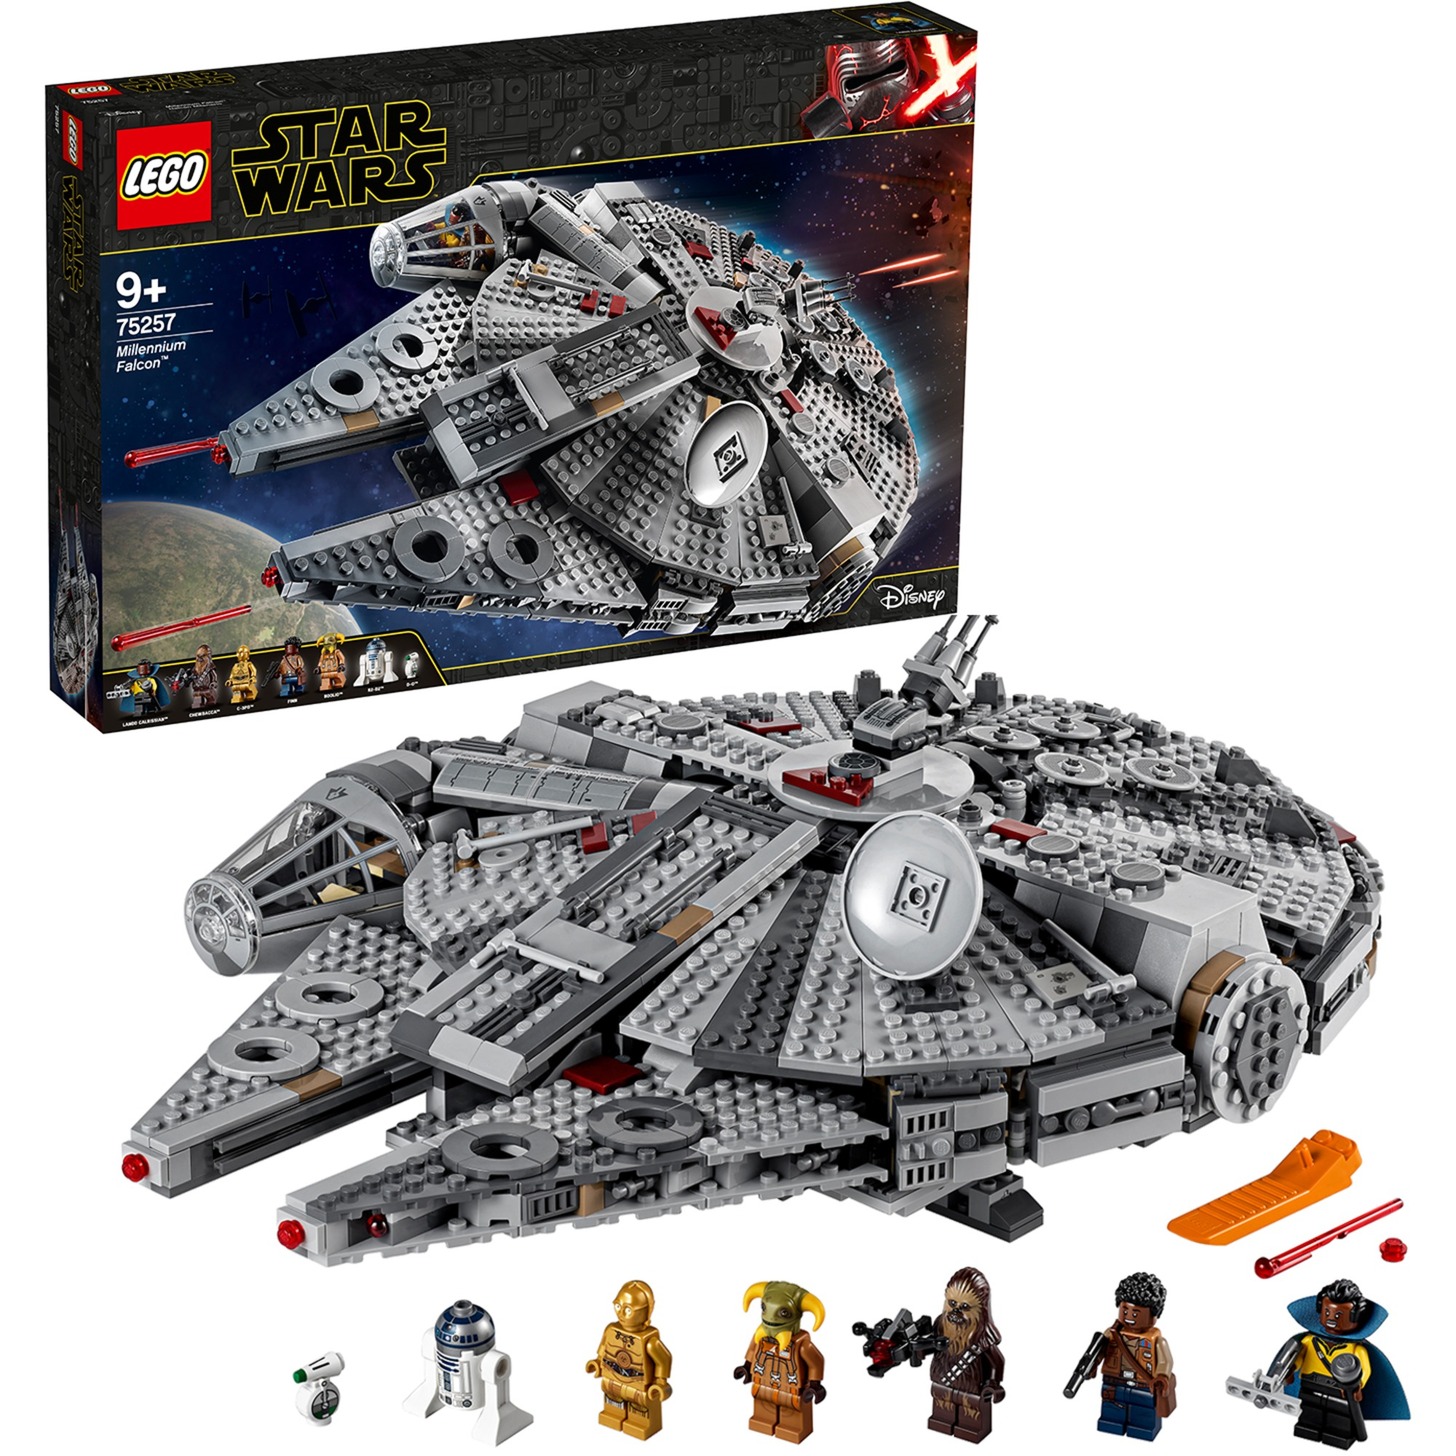 Spielzeug: Lego 75257 Star Wars Millennium Falcon